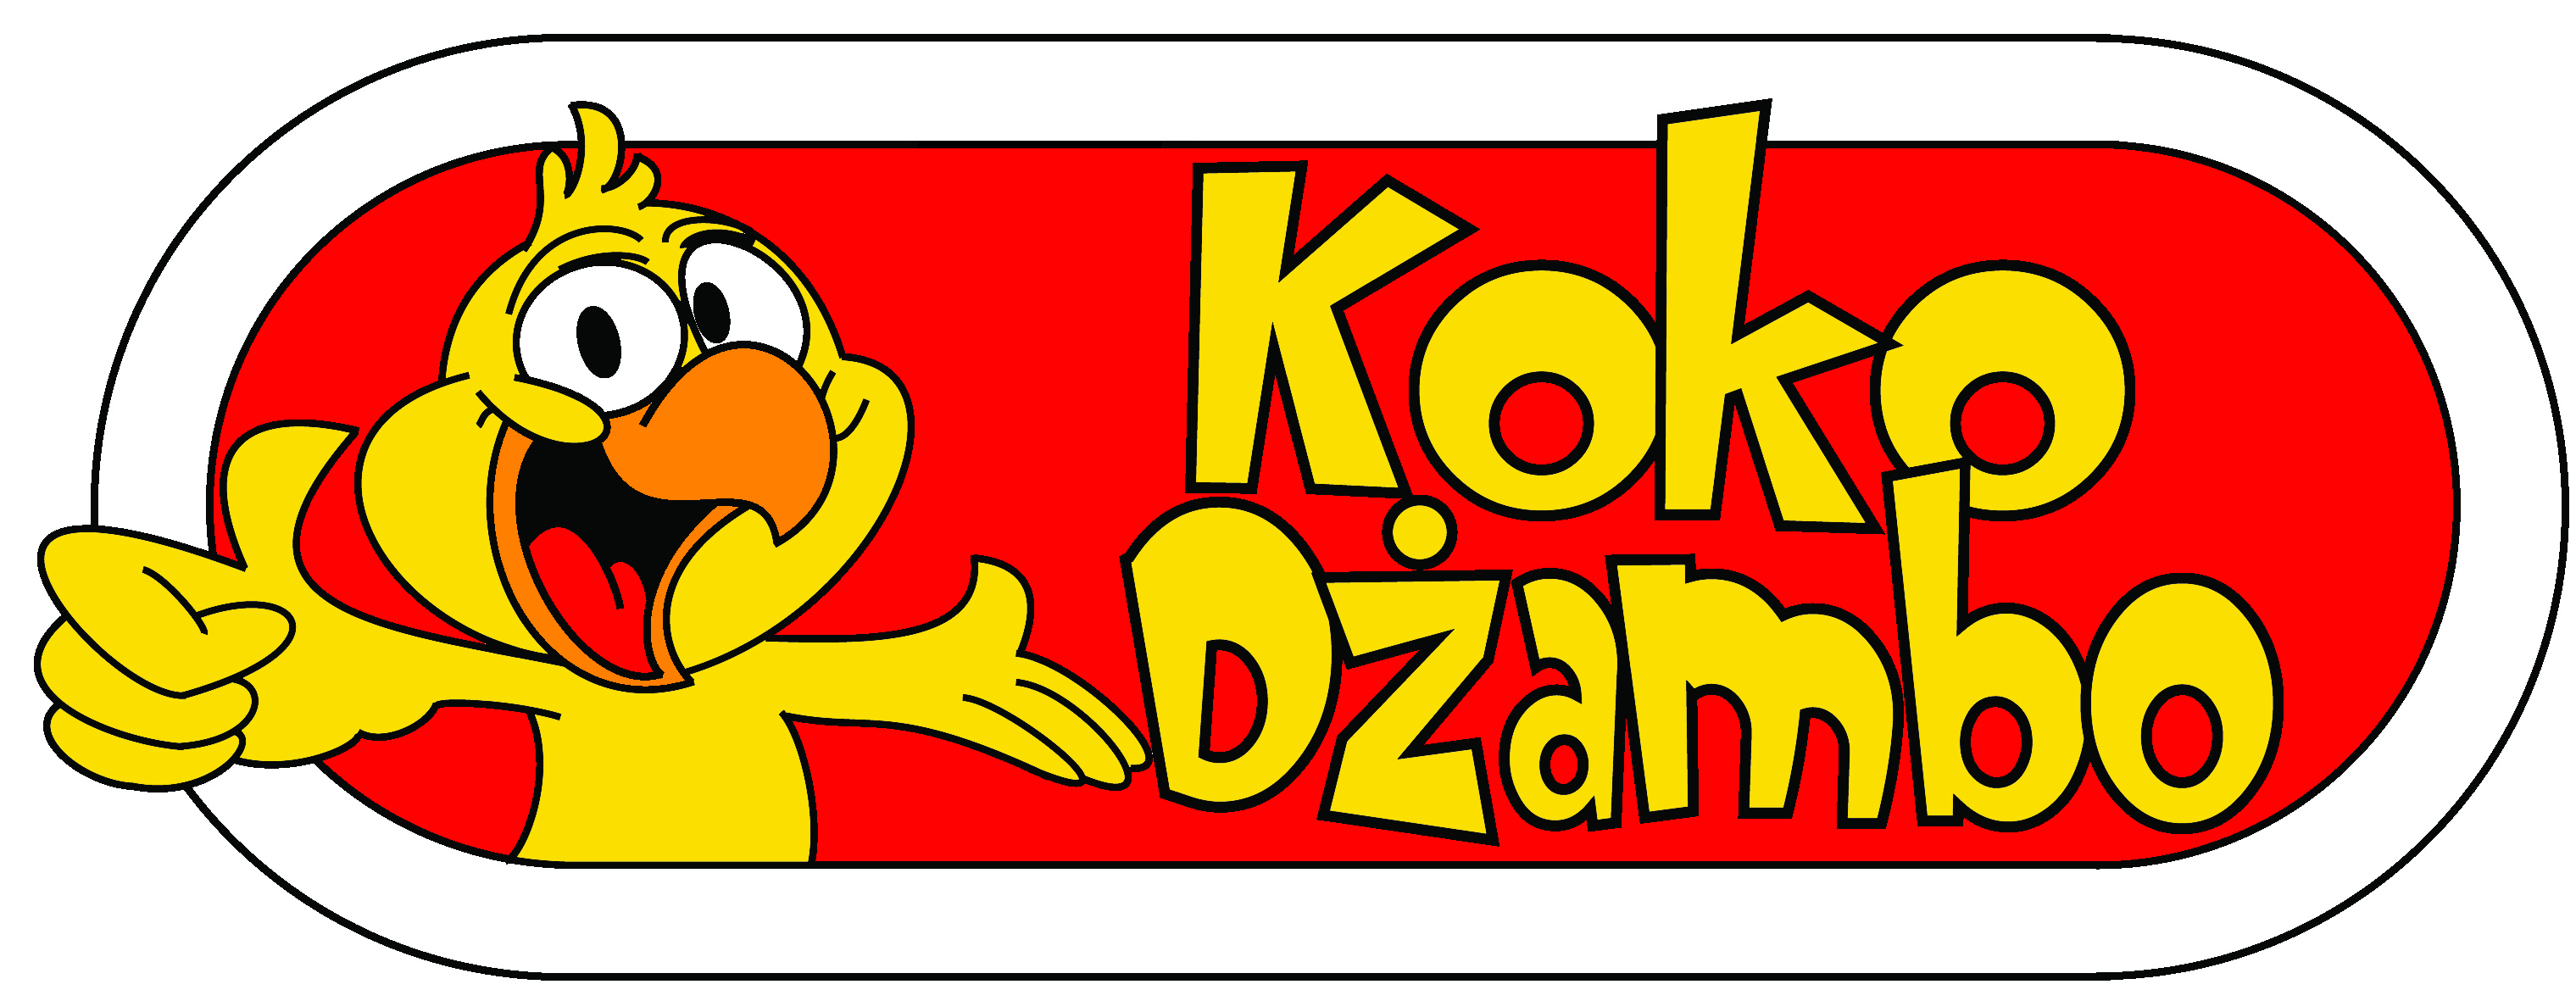 Koko Dżambo - Logo.jpg